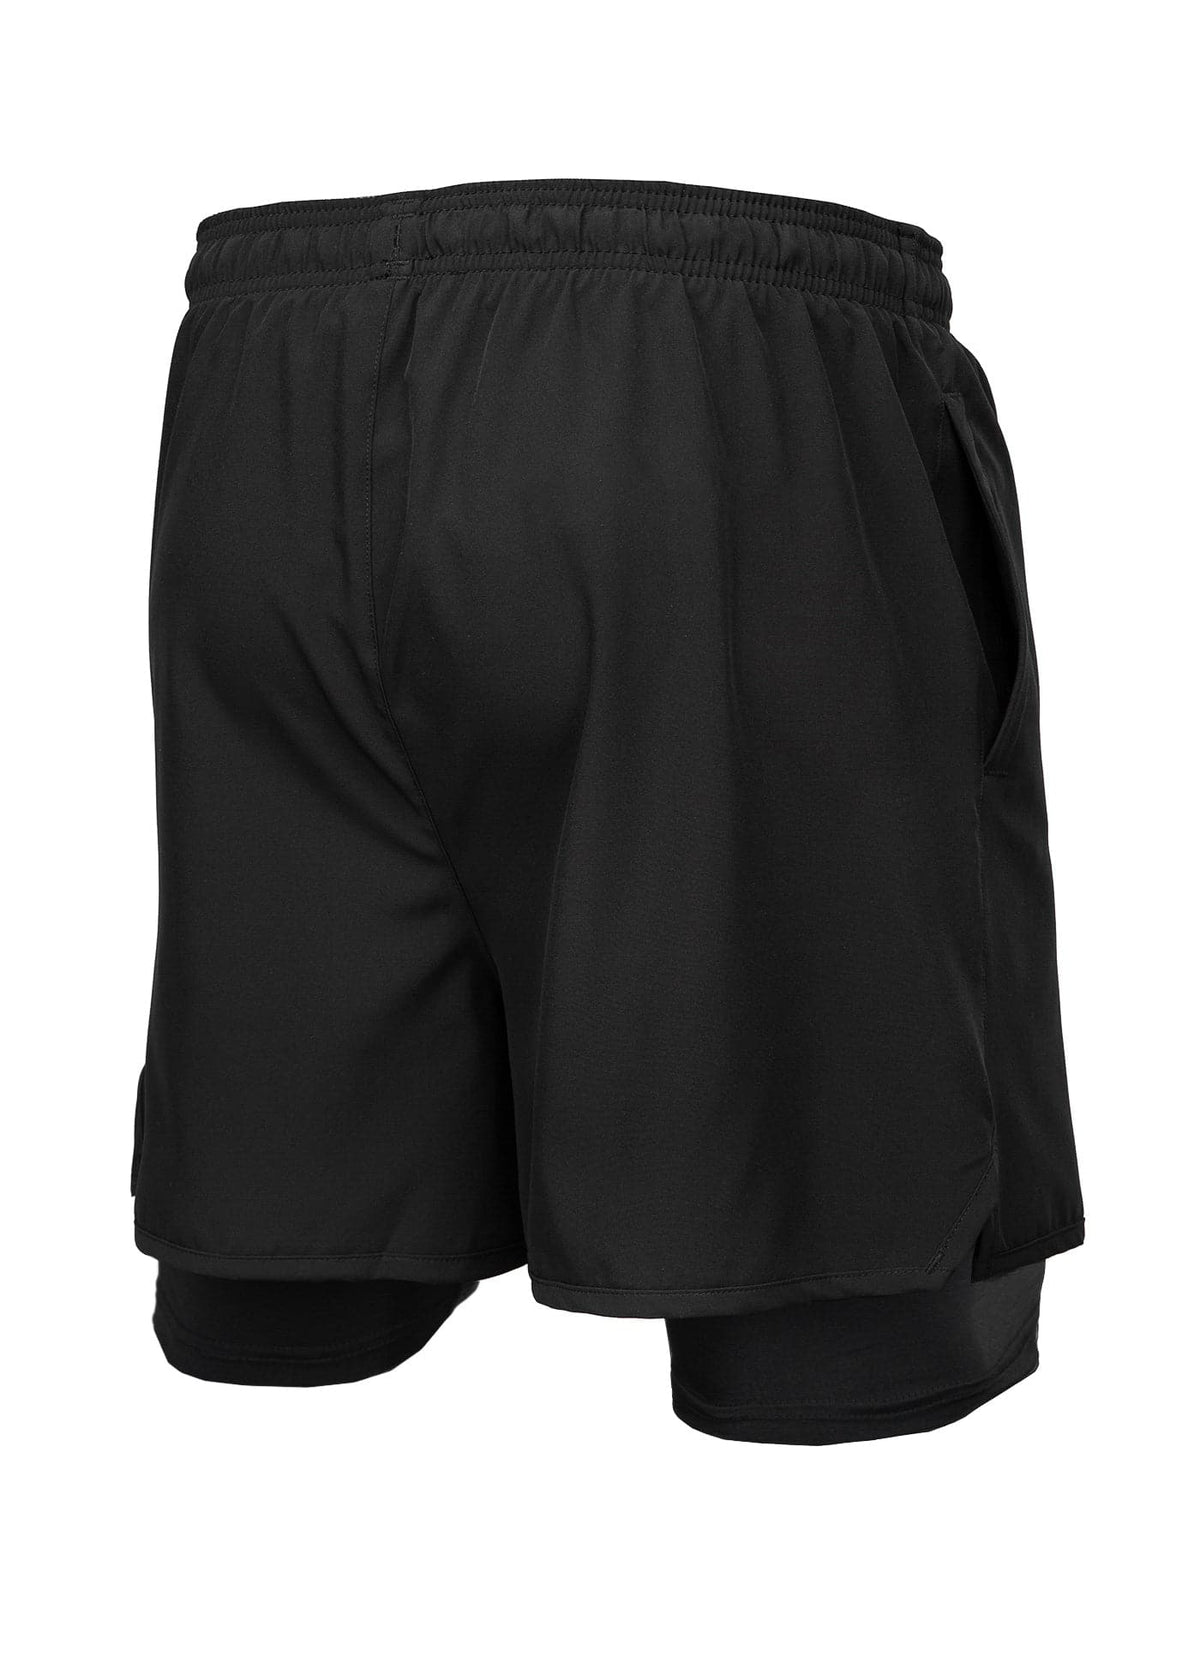 NEW LOGO Mesh Black Shorts.